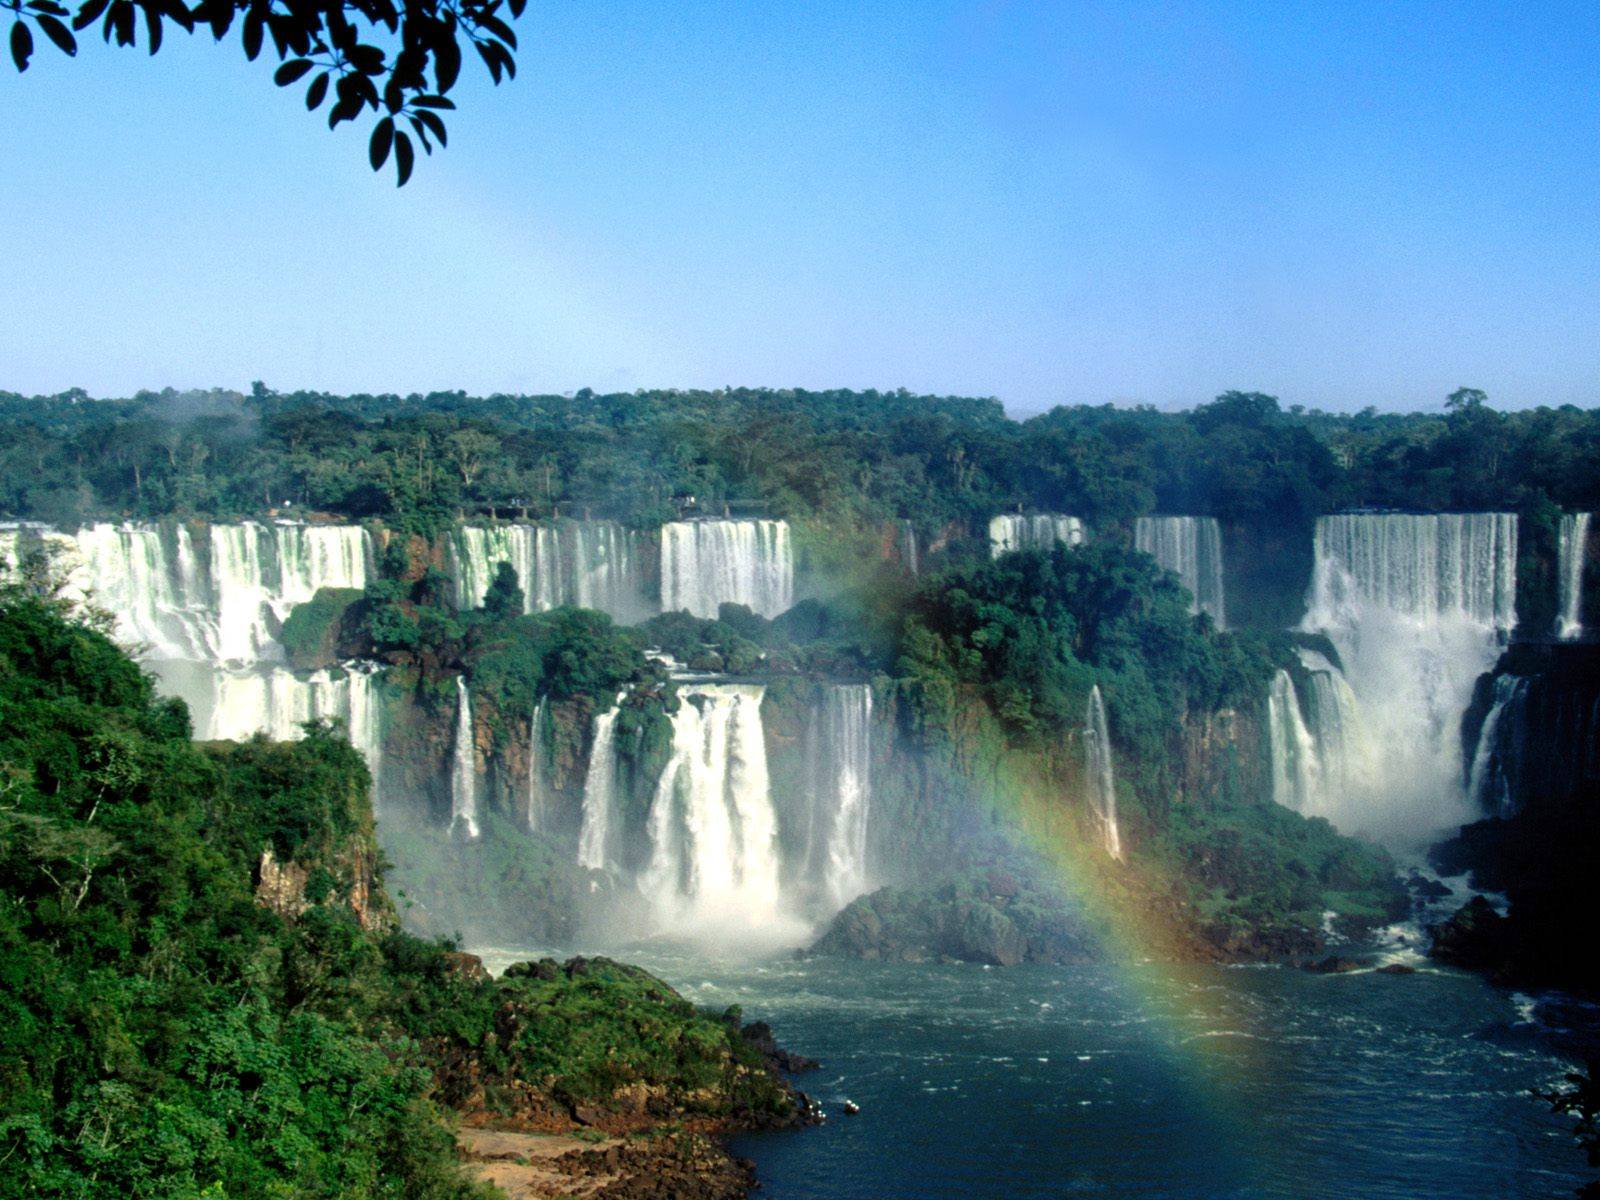 http://2.bp.blogspot.com/_0q212rj5uIE/S-cD9KYksPI/AAAAAAAAAlU/uXEr6dHNvBY/s1600/iguazu-falls-brazil1.jpg